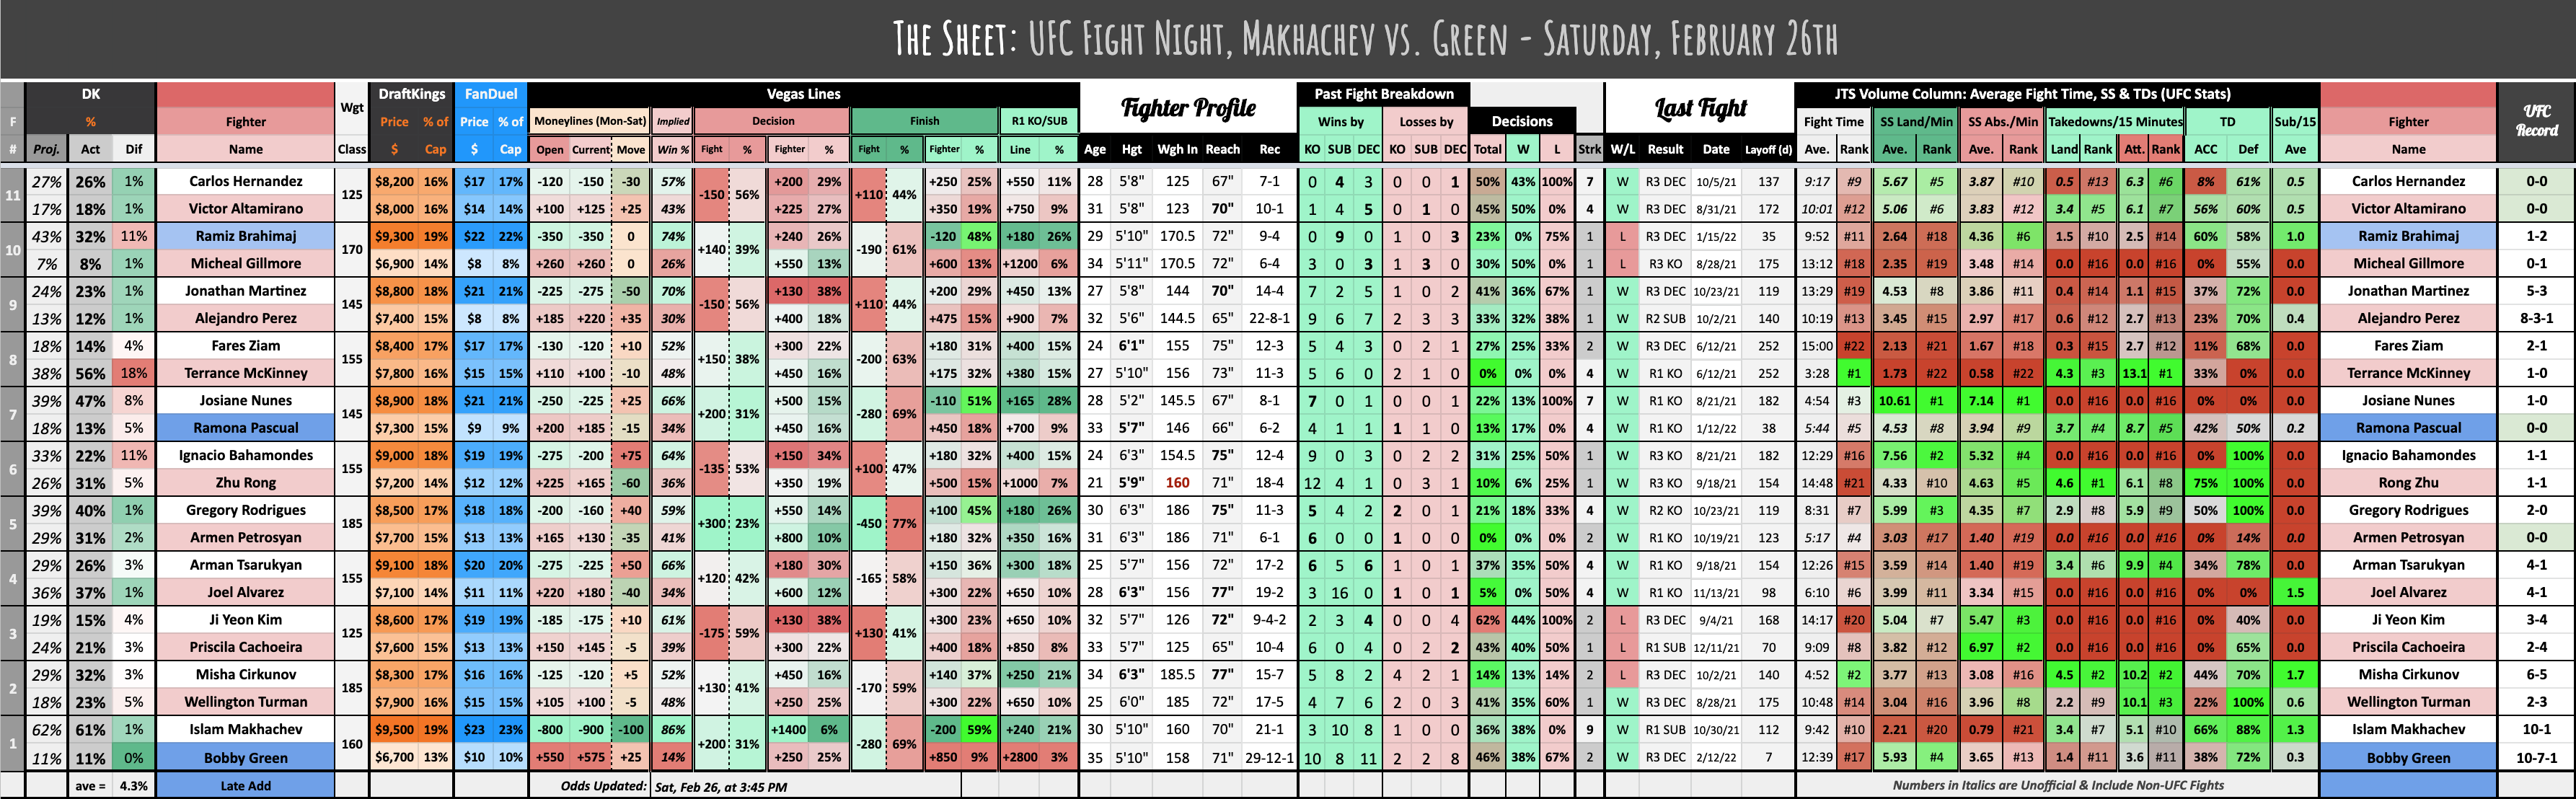 UFC Fight Night, Makhachev vs. Green - Saturday, February 26th